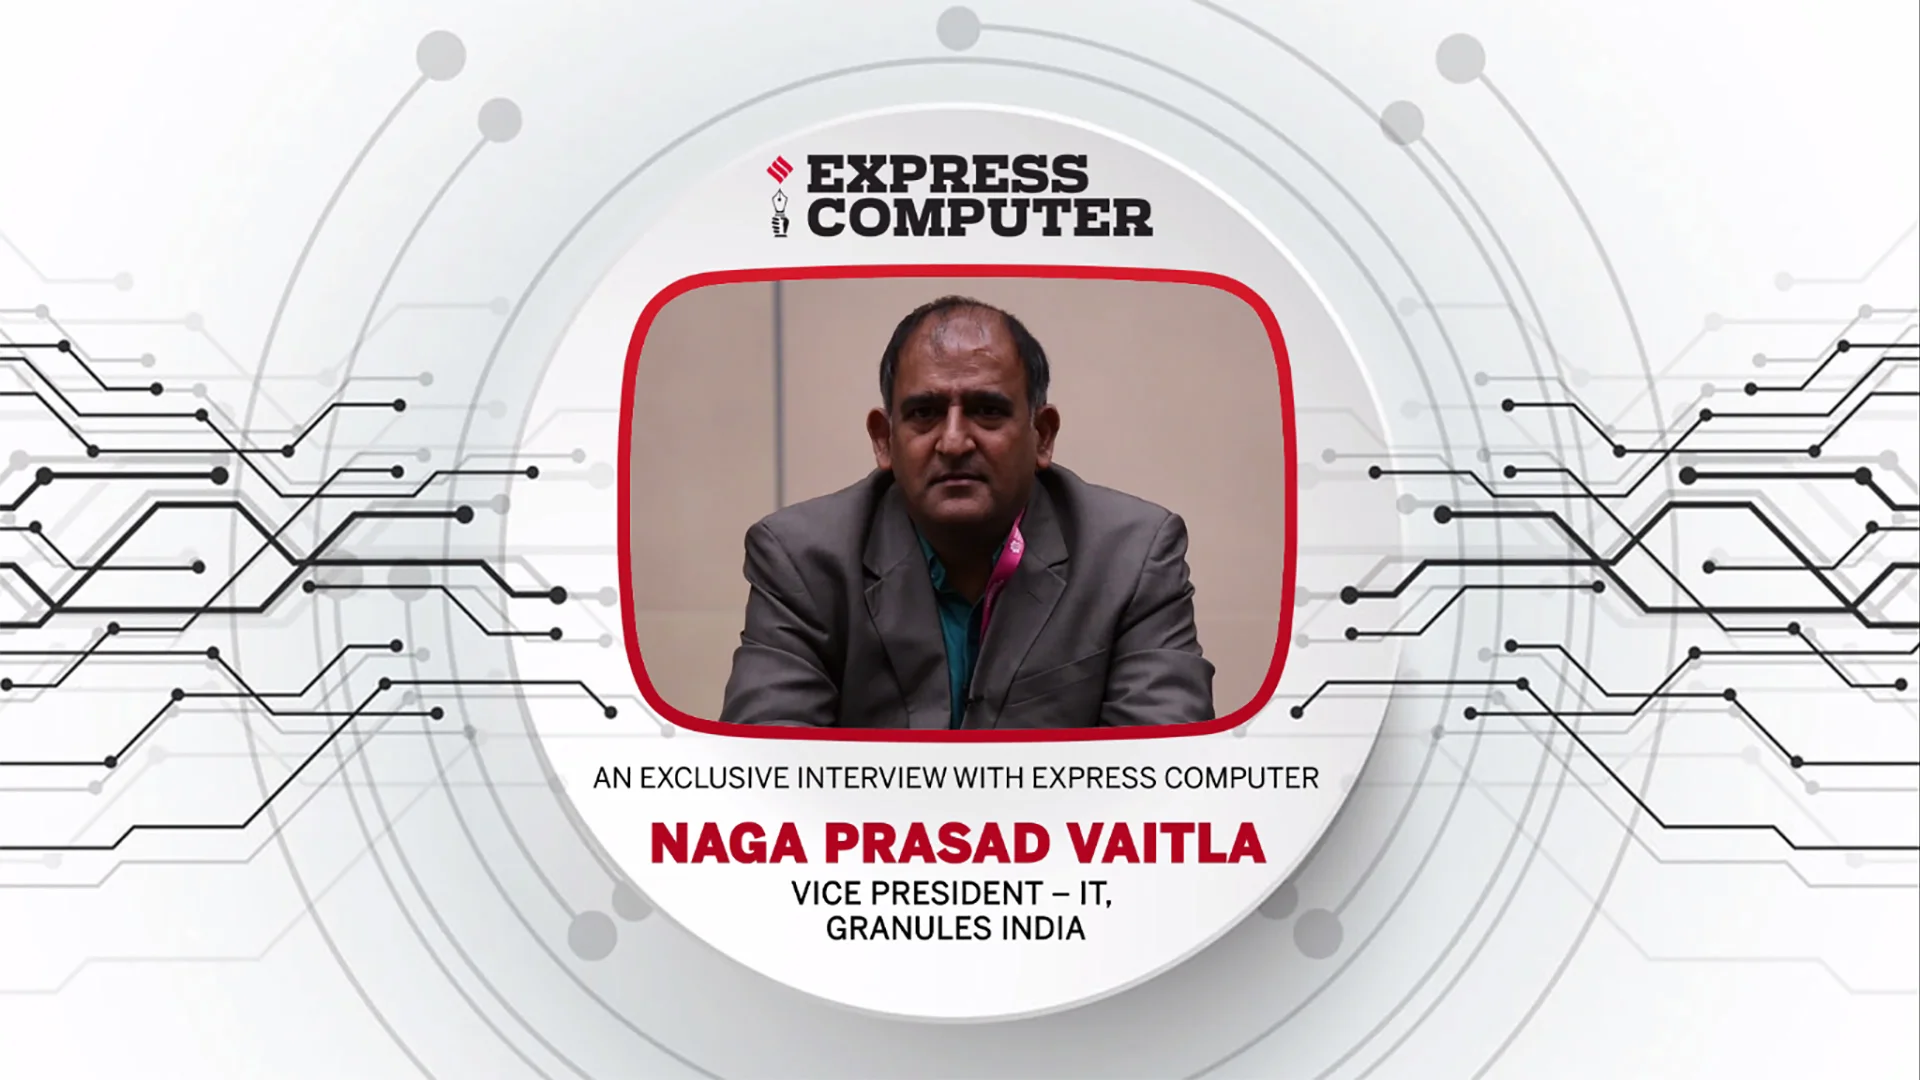 Granules India adopting design thinking in a big way: Naga Prasad Vaitla,  Vice President - IT, Granules India on Vimeo